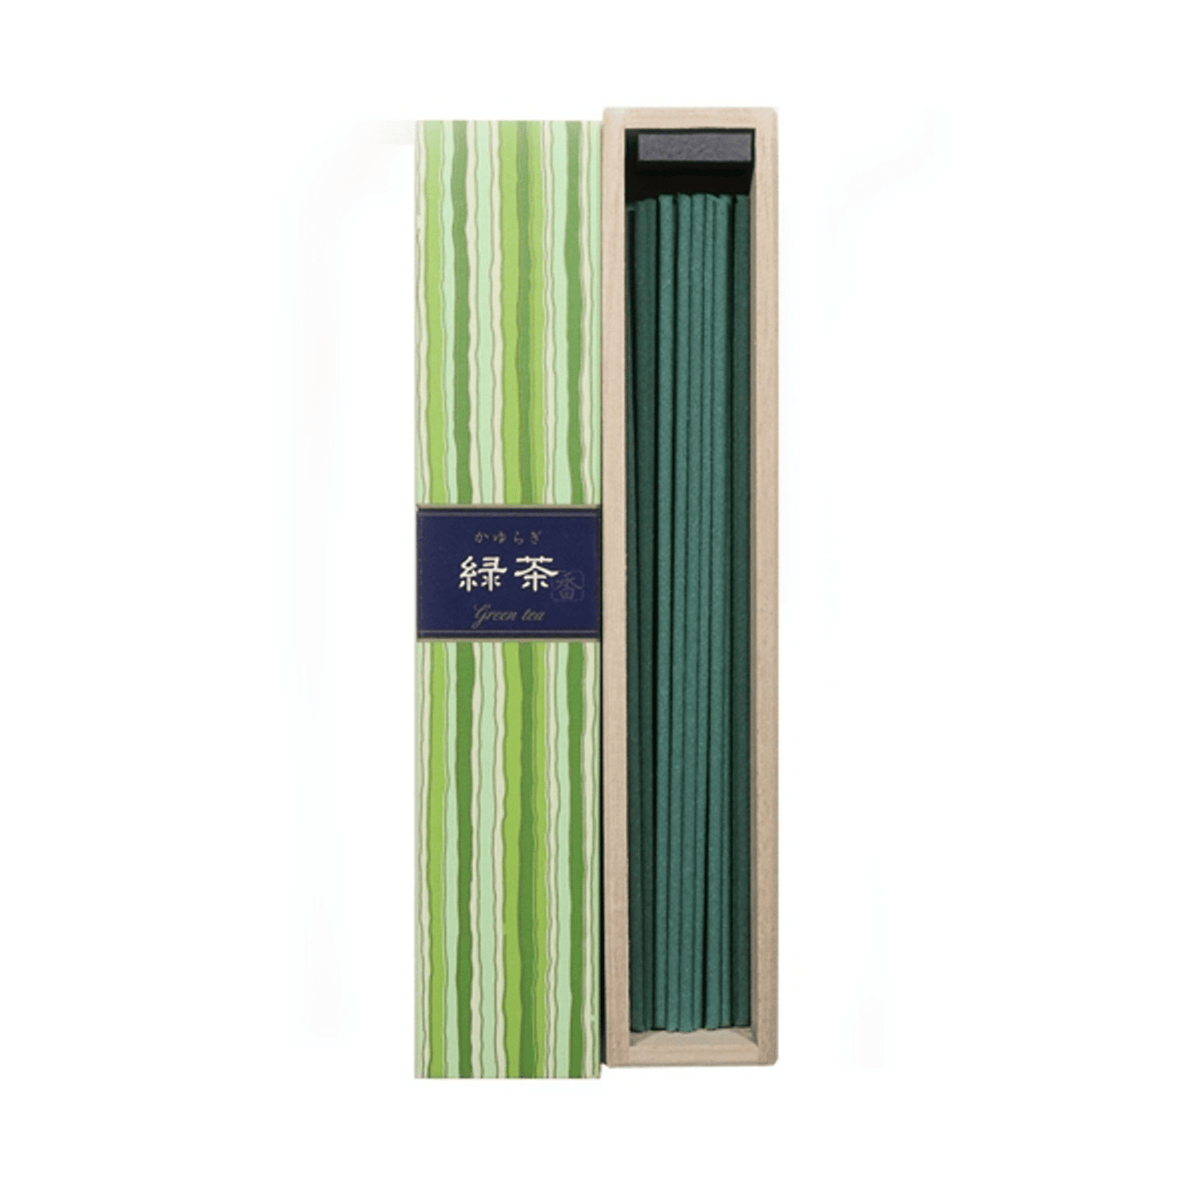 Primary Image of Kayuragi - Green Tea Incense